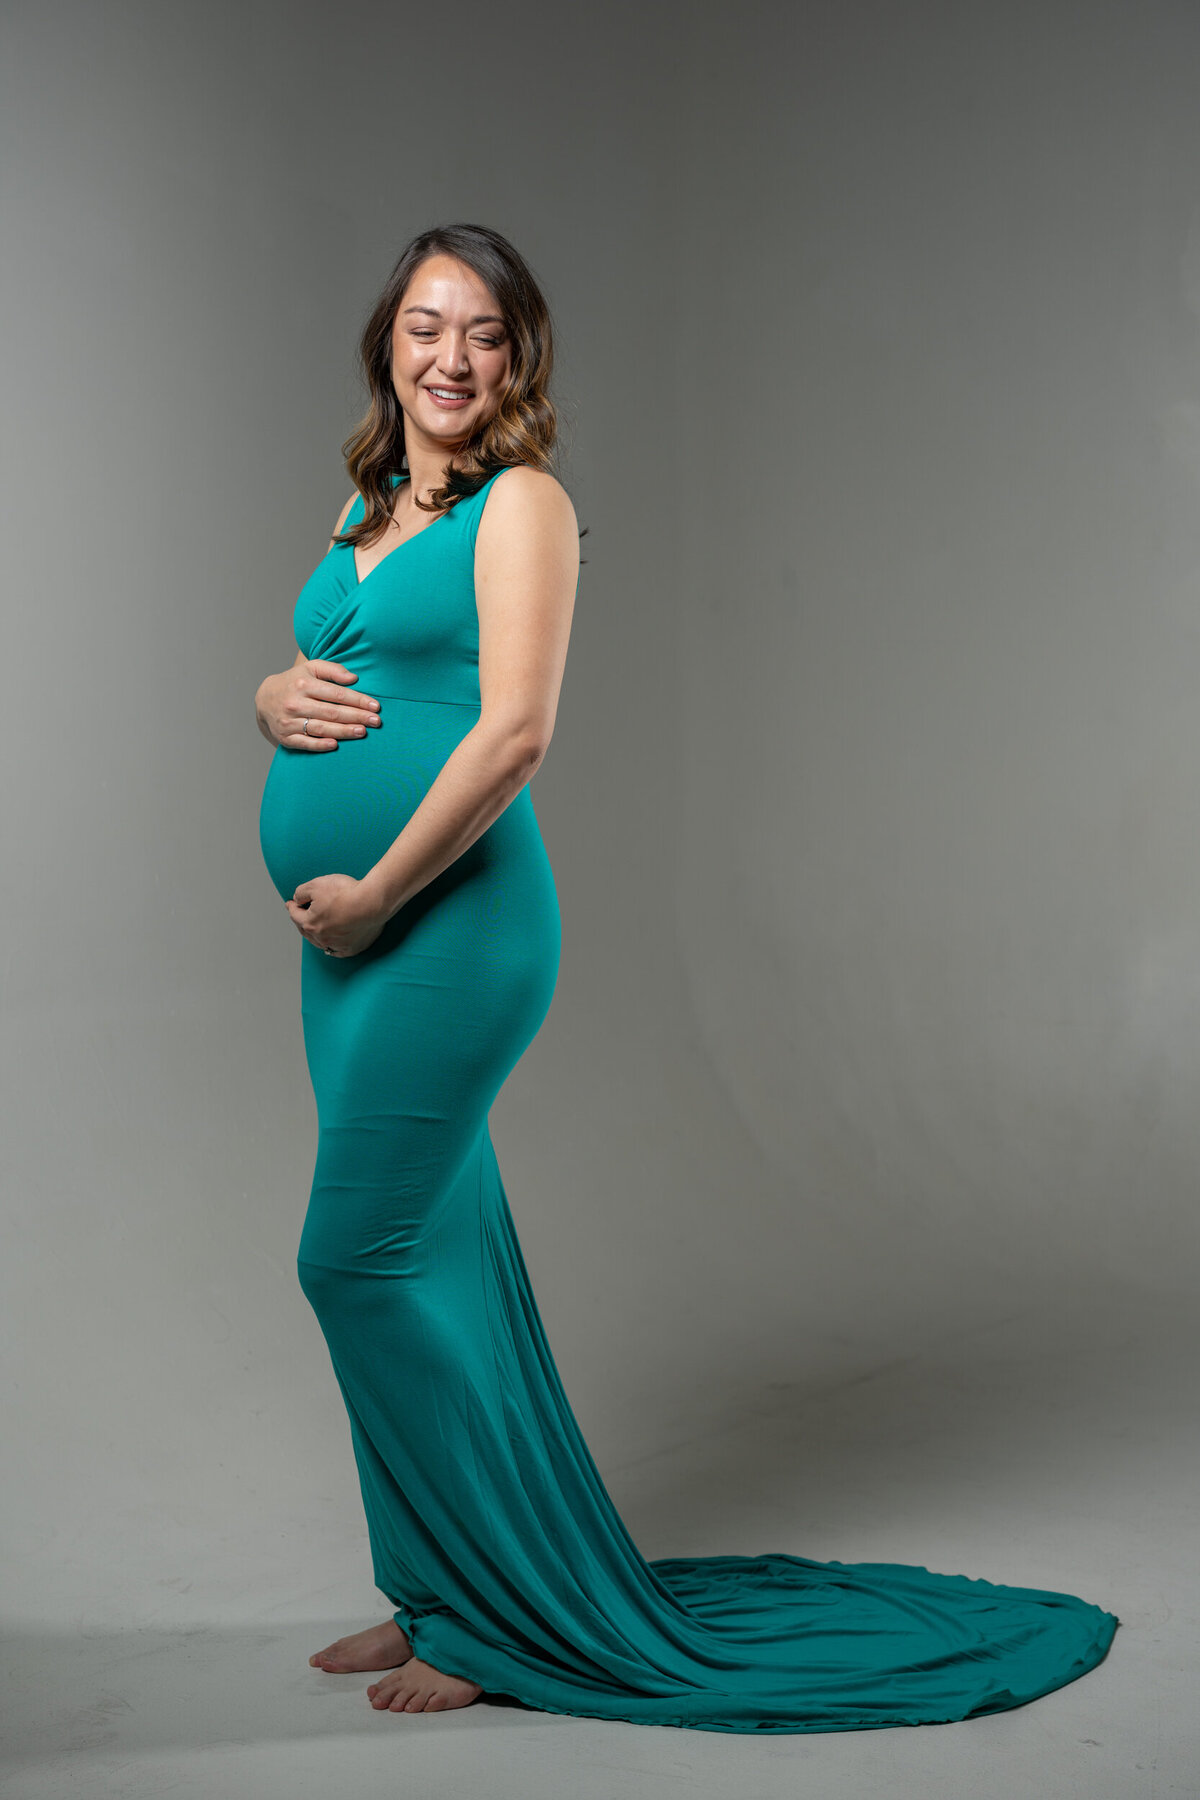 las-vegas-maternity-photographer-4